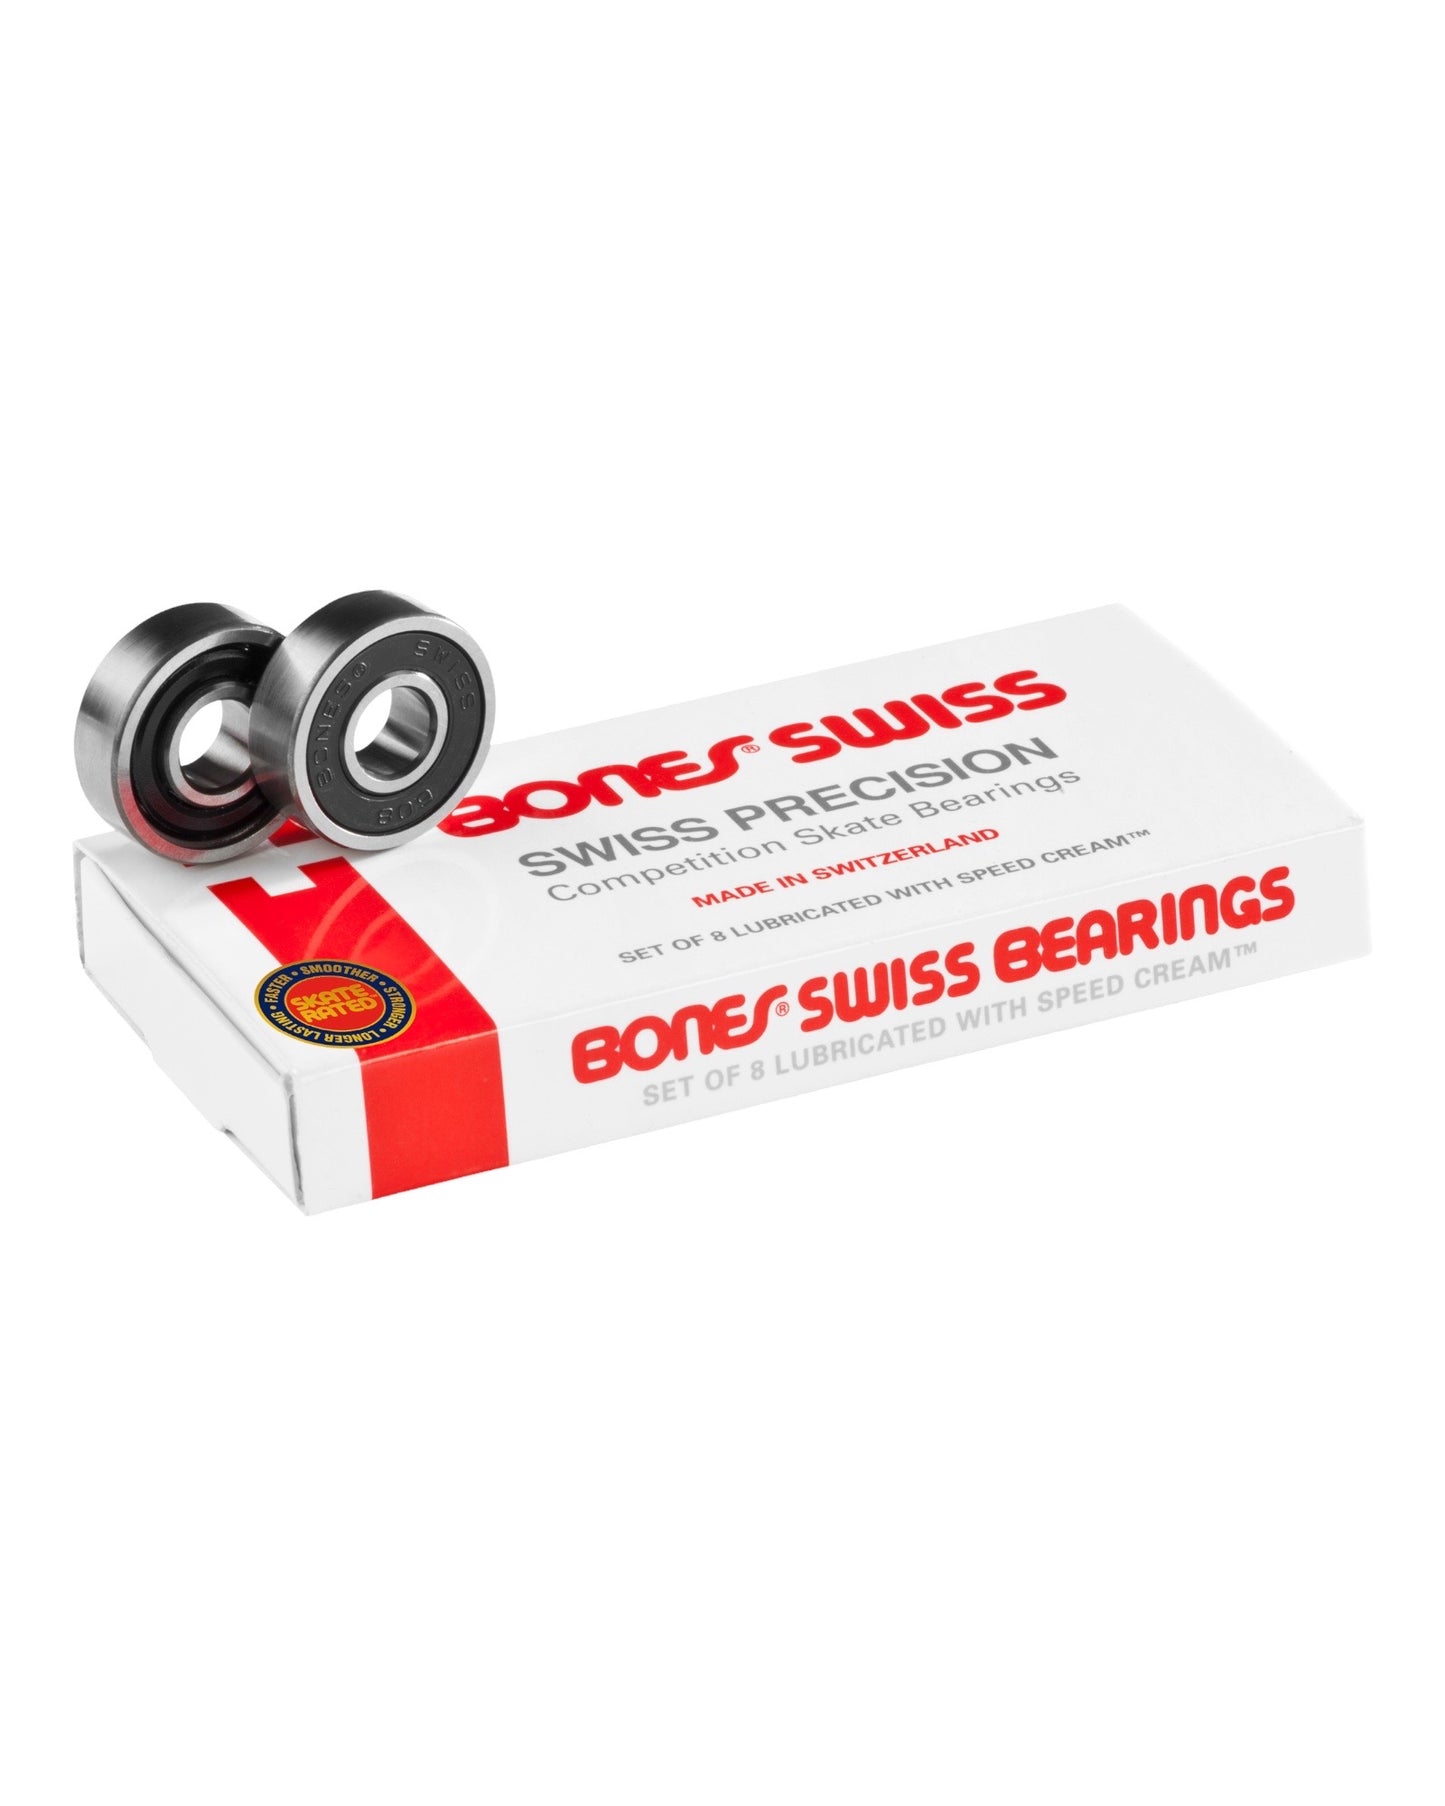 Bones Swiss Skateboard Bearings - 8 pack